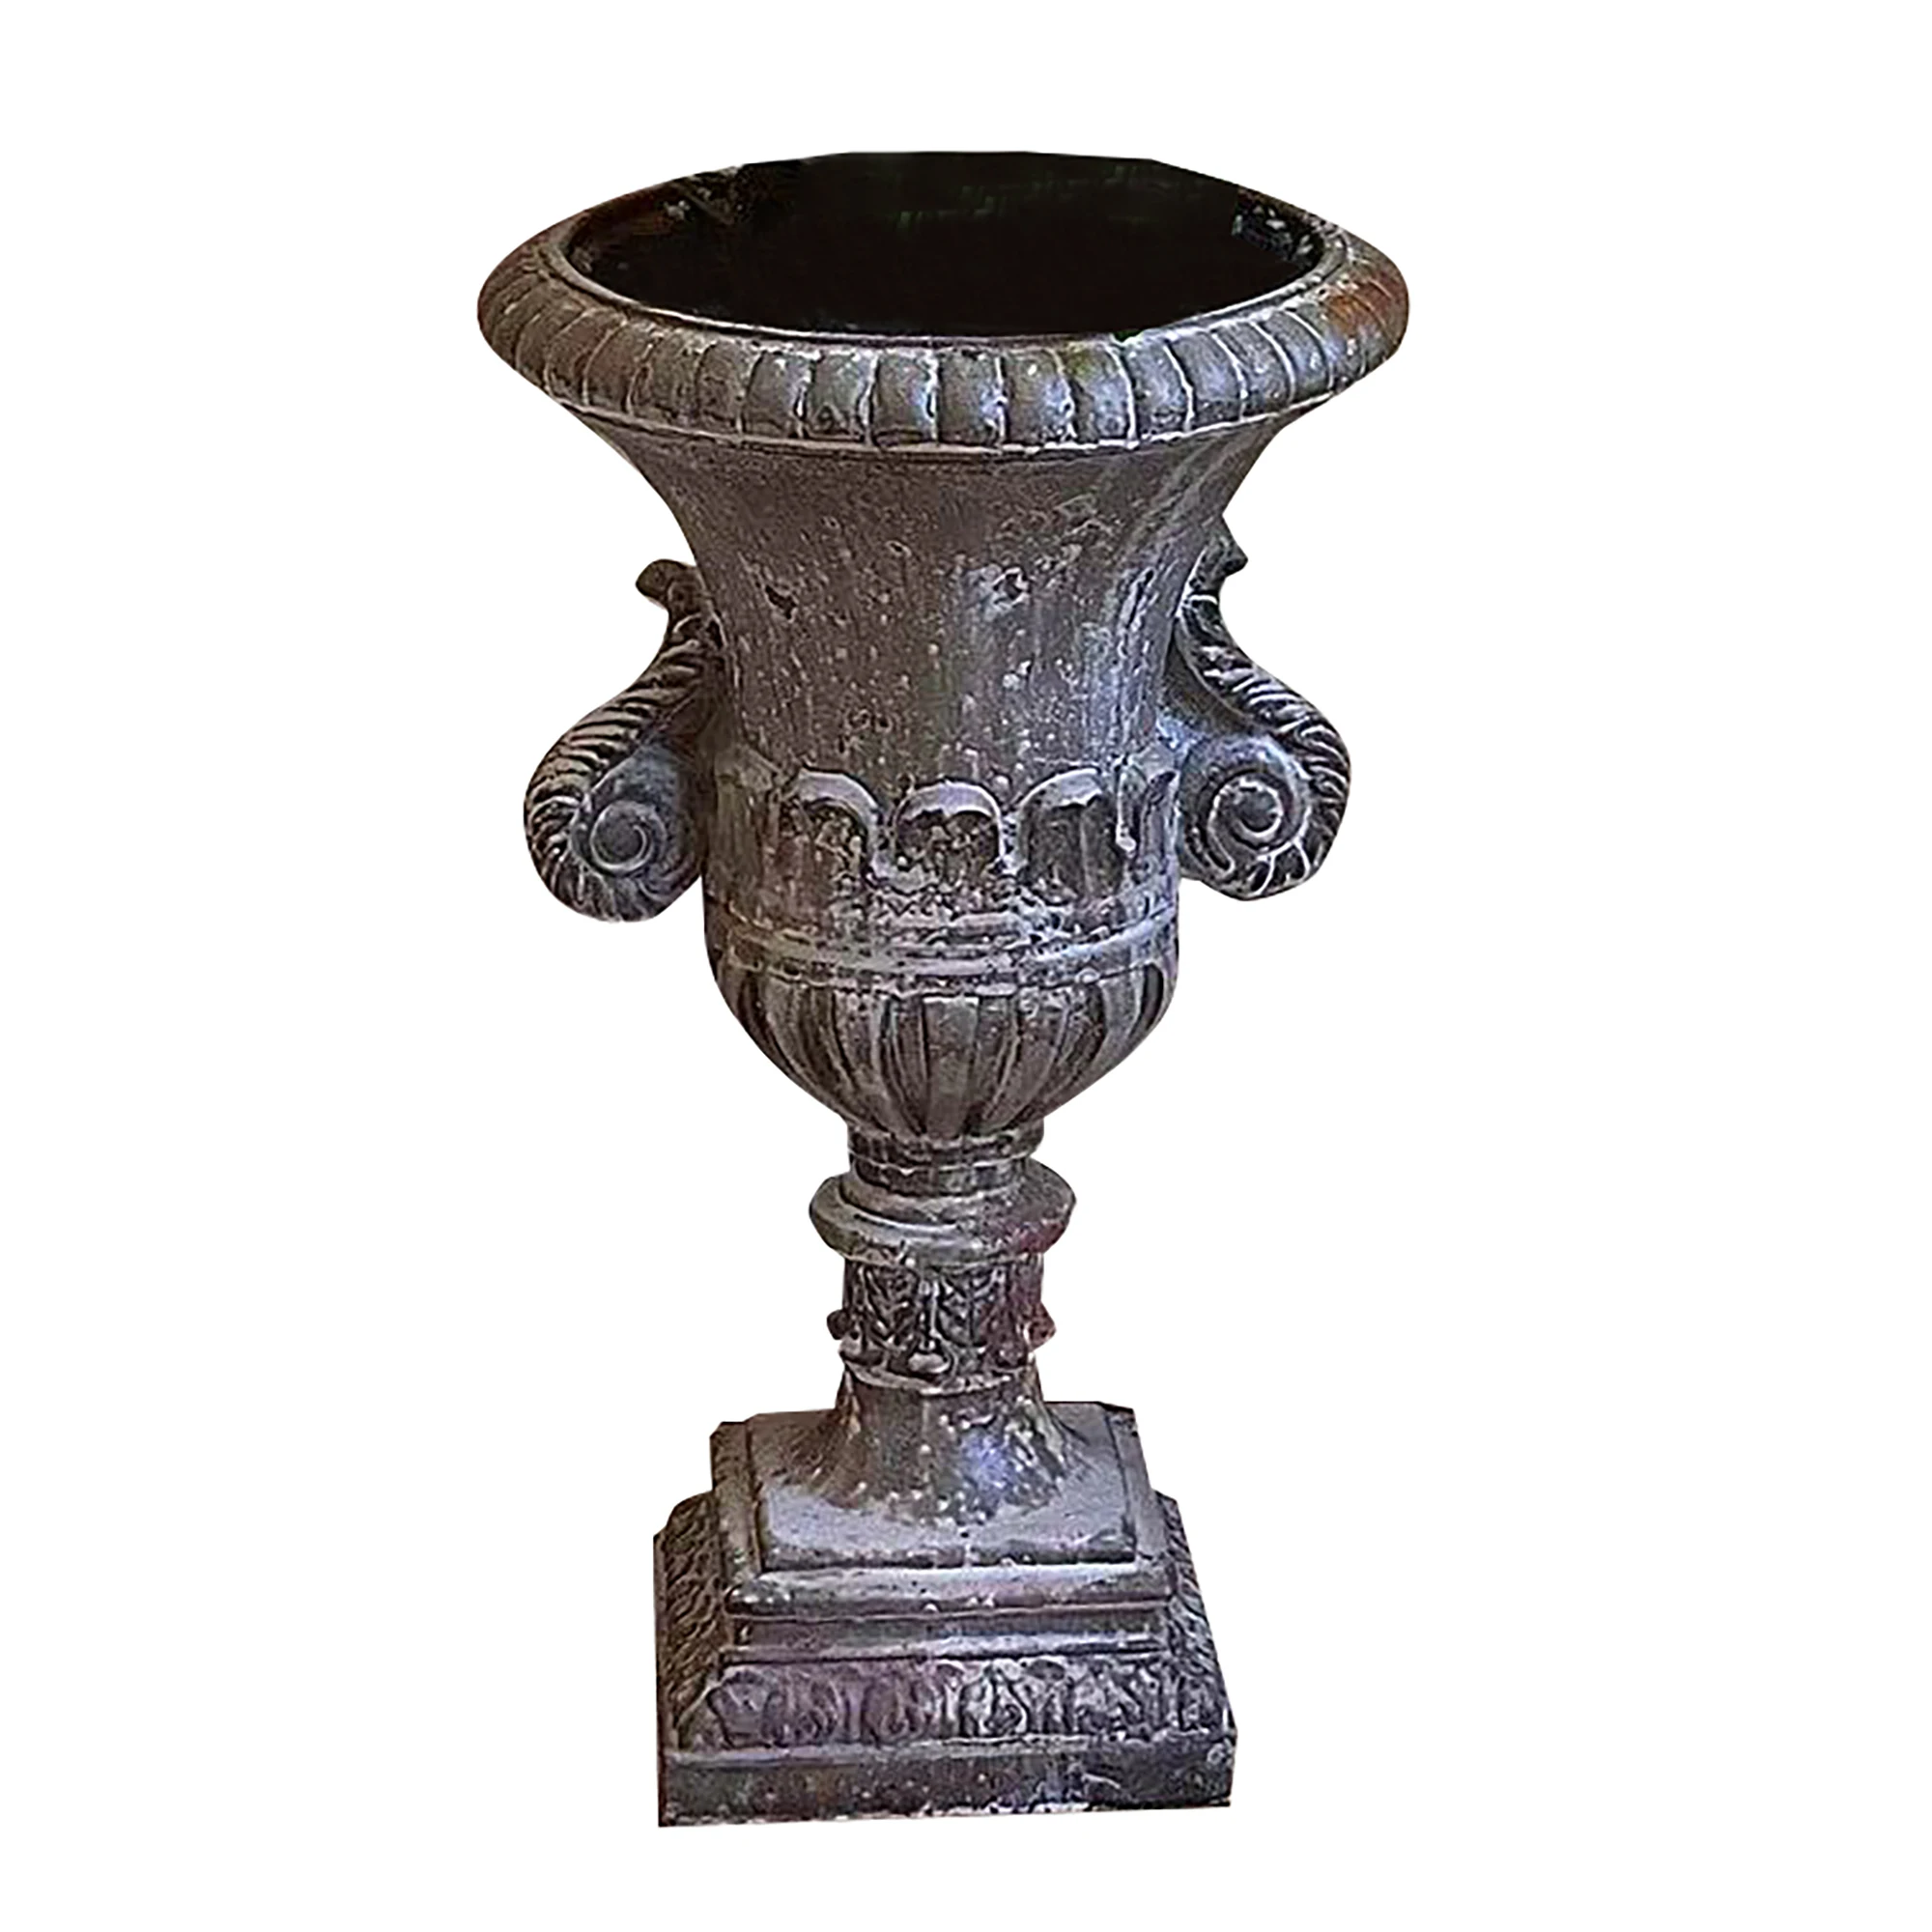 Resin Handcrafted Vintage Retro Decorative Vase Urn Flower Pot with Drainage Hole